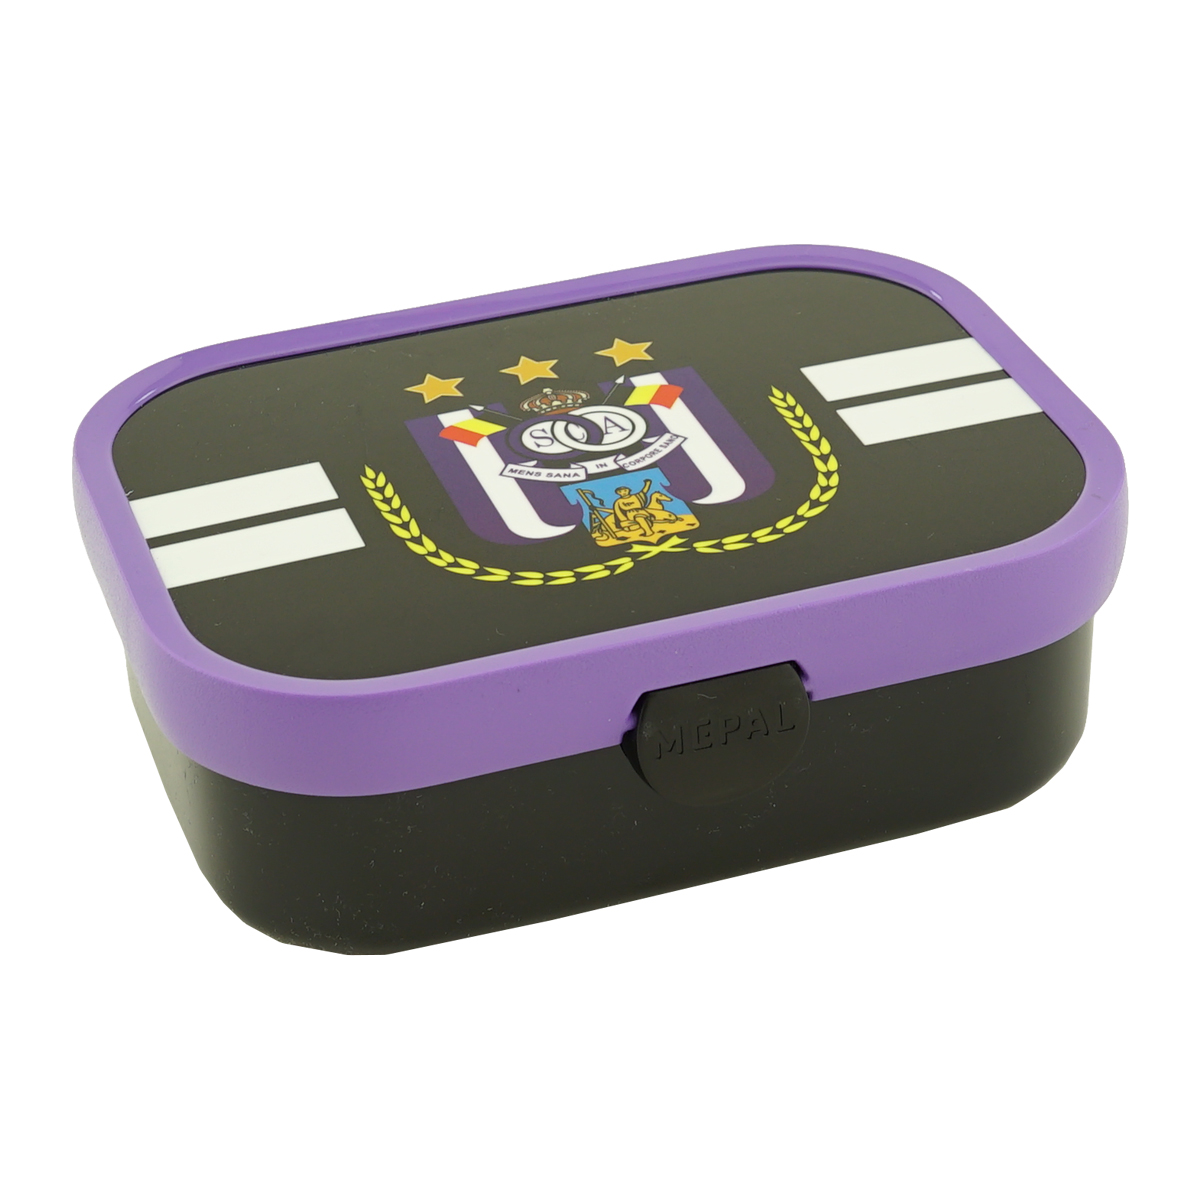 RSCA Lunchbox Mepal - Black/Purple